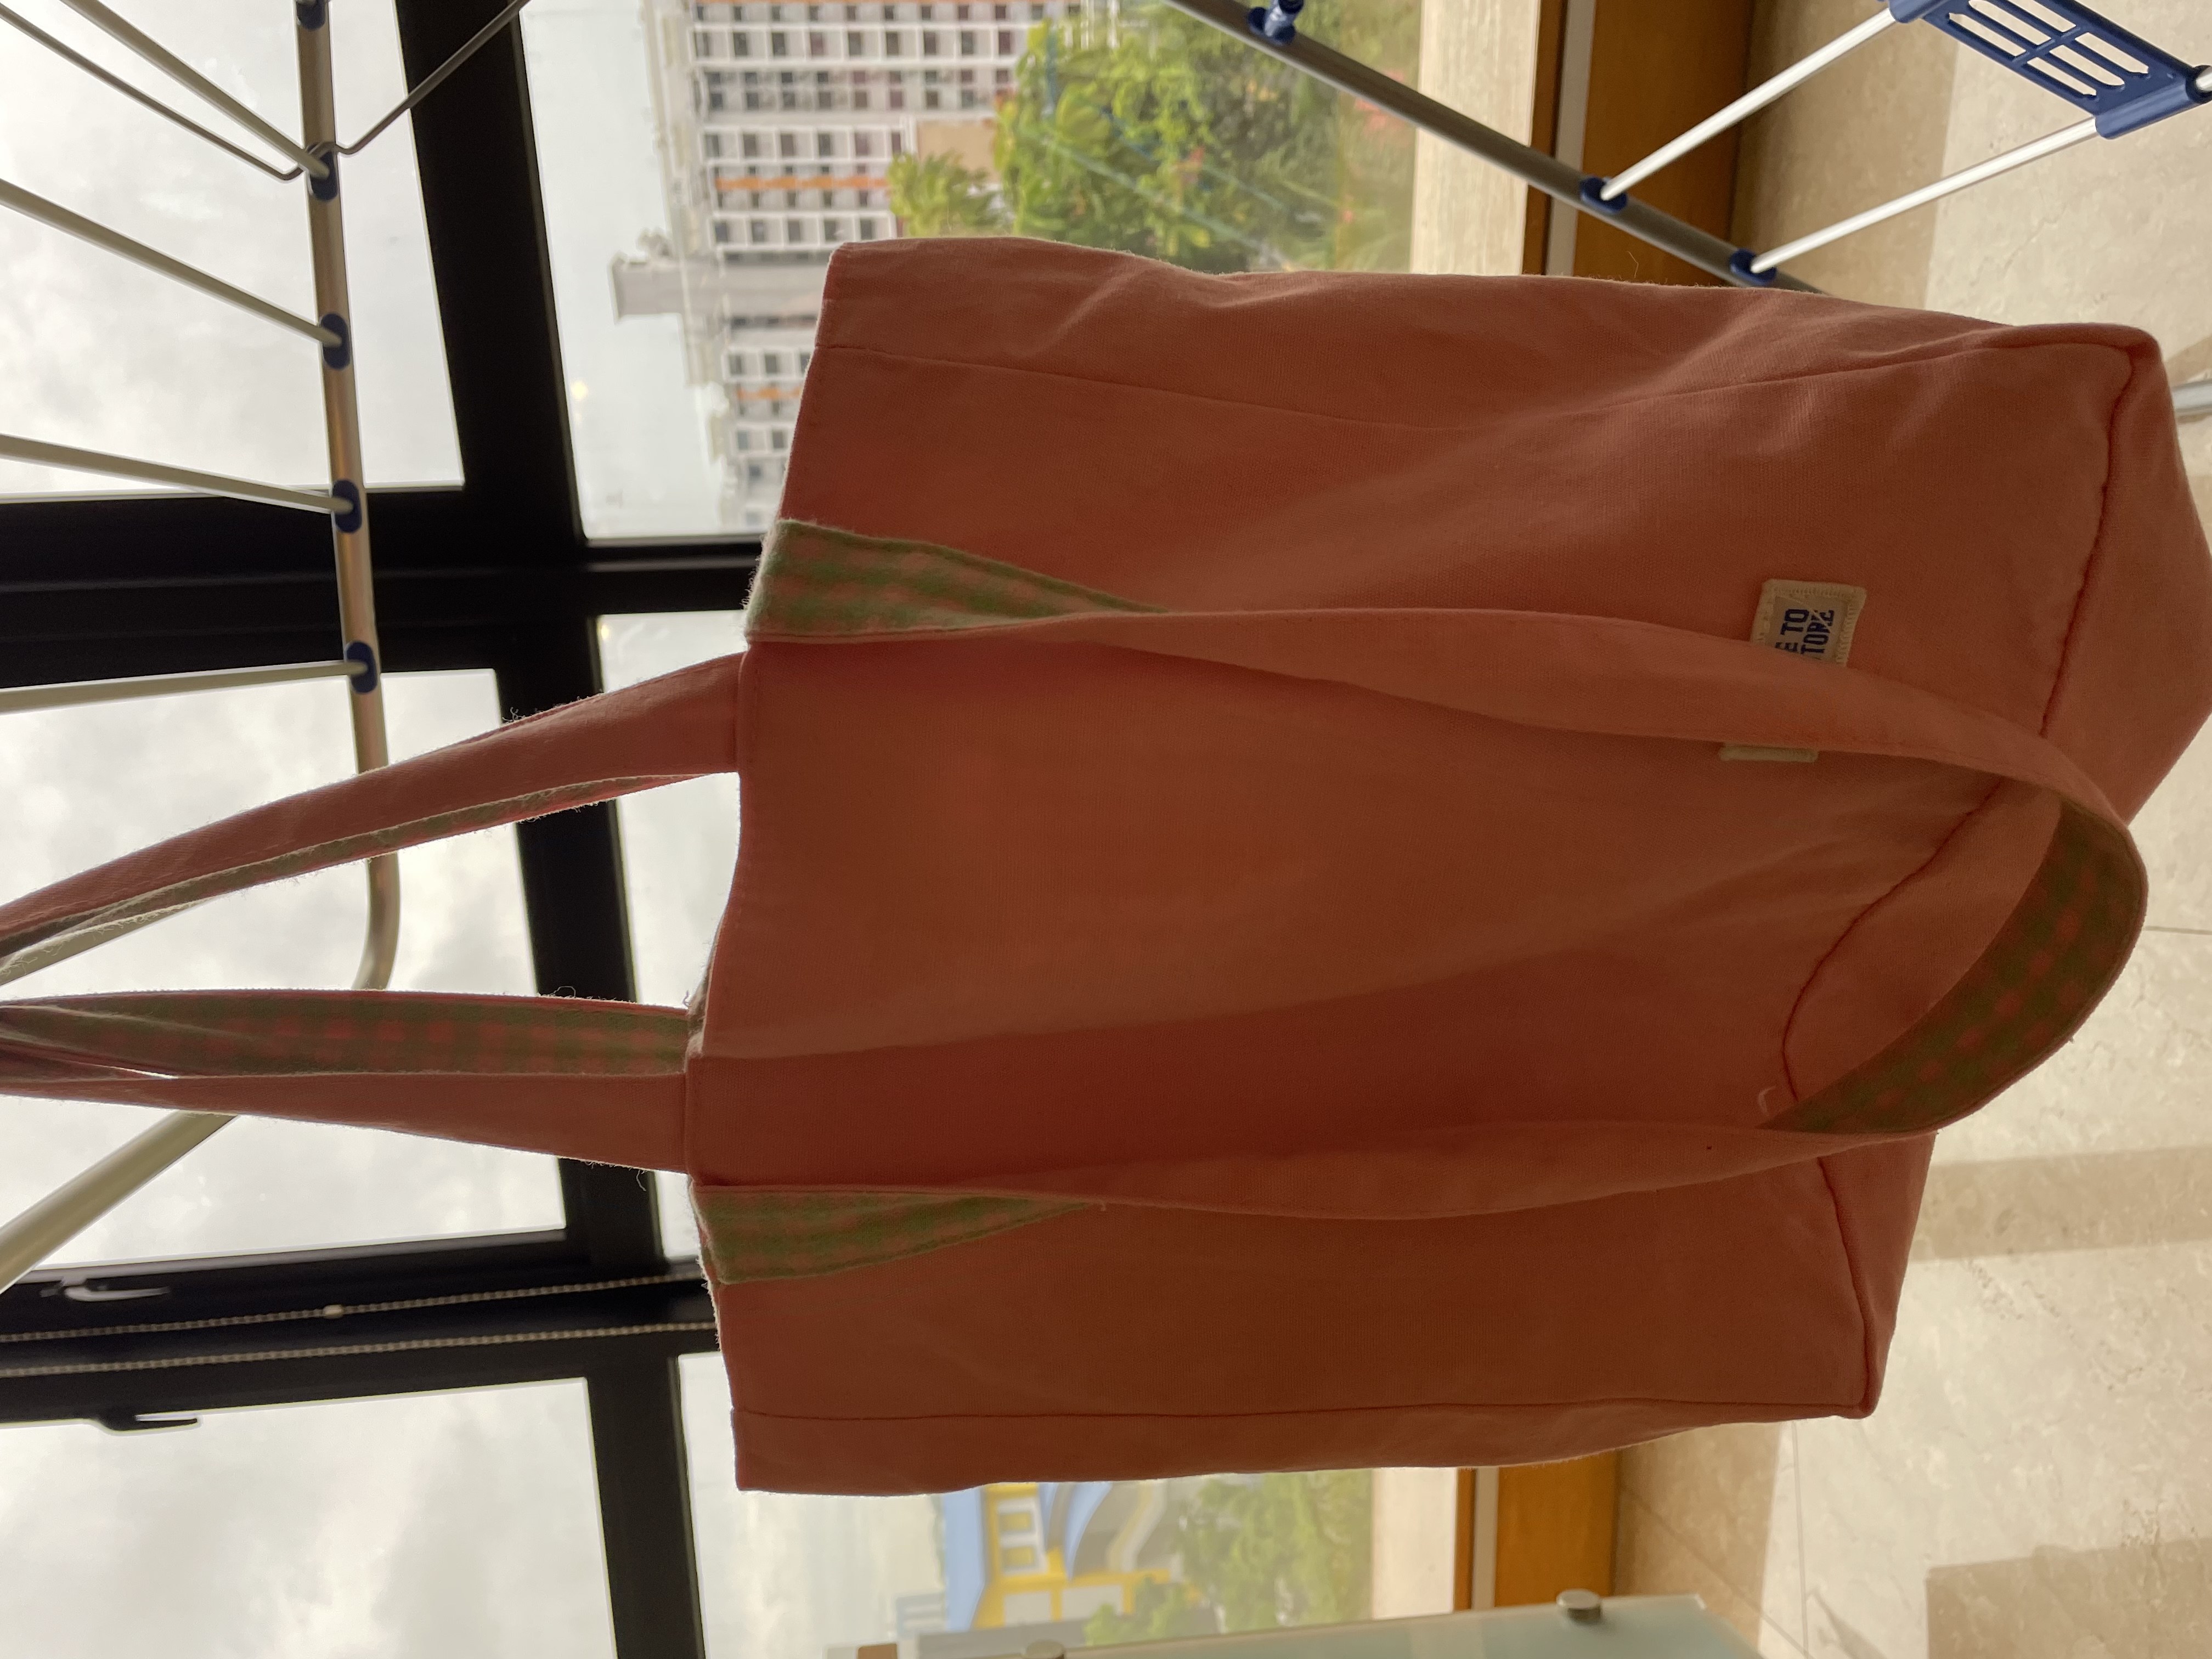 Review of pink tote bag